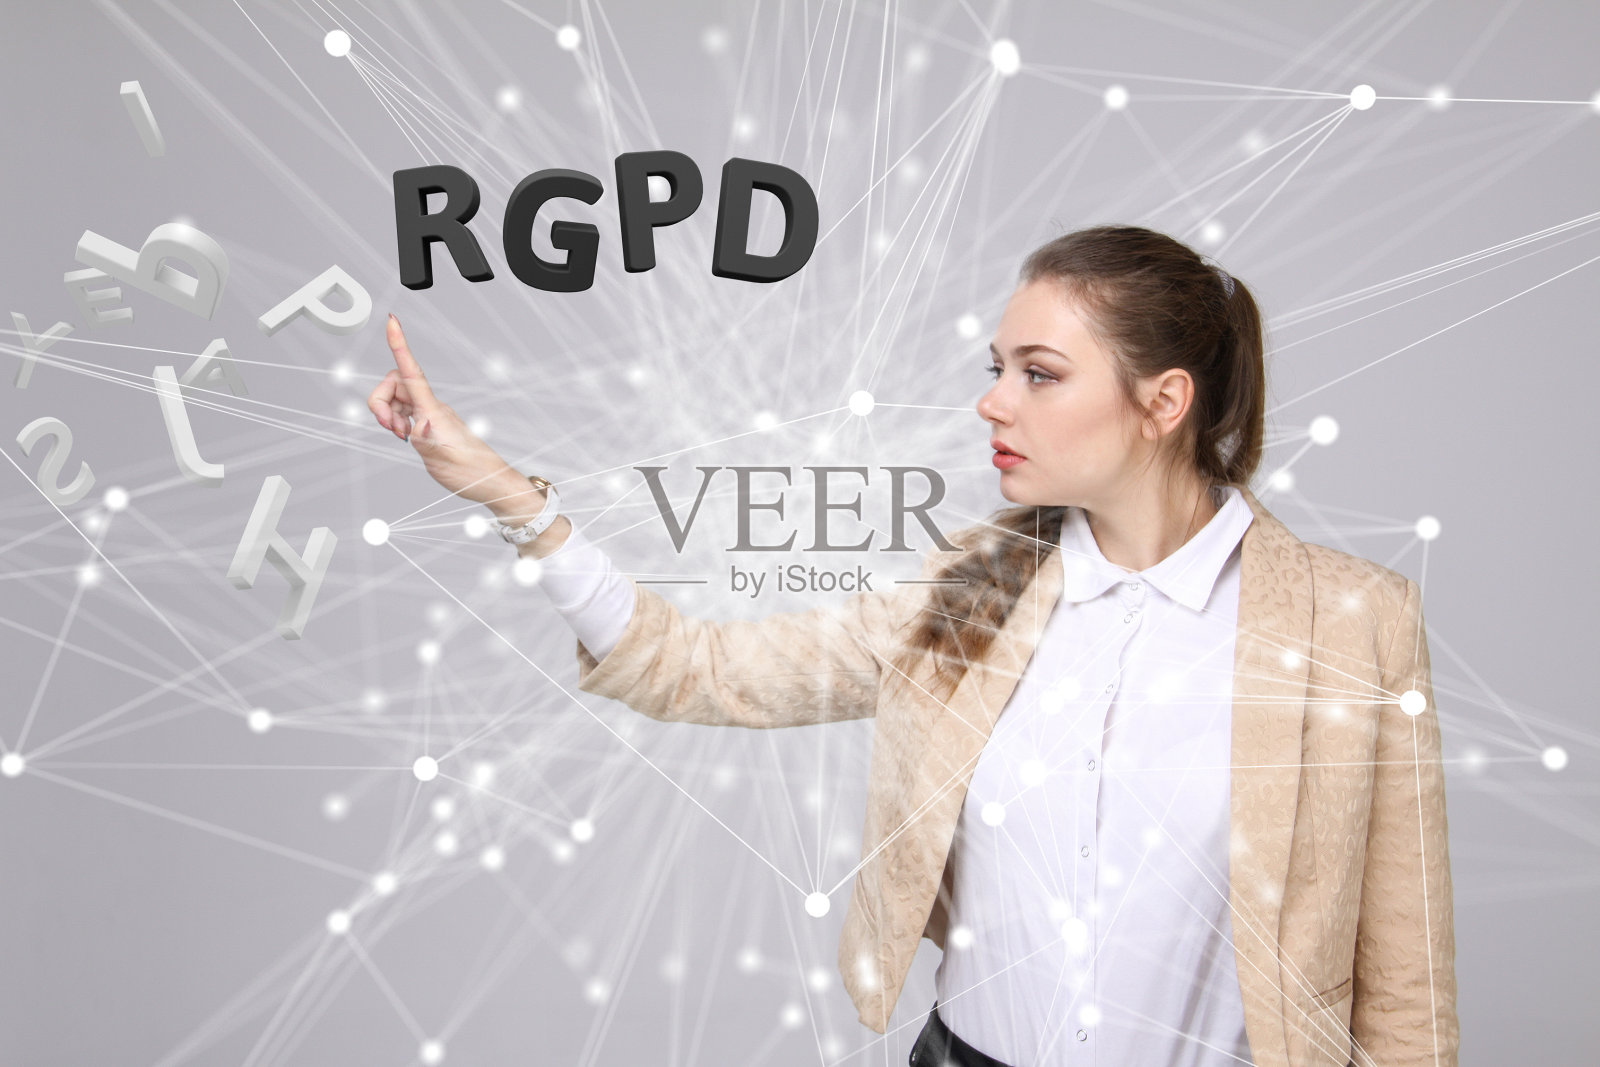 RGPD，西班牙语，法语和意大利语版本的GDPR版本:Reglamento General de Proteccion de datos。一般数据保护条例。从事信息工作的年轻女子照片摄影图片